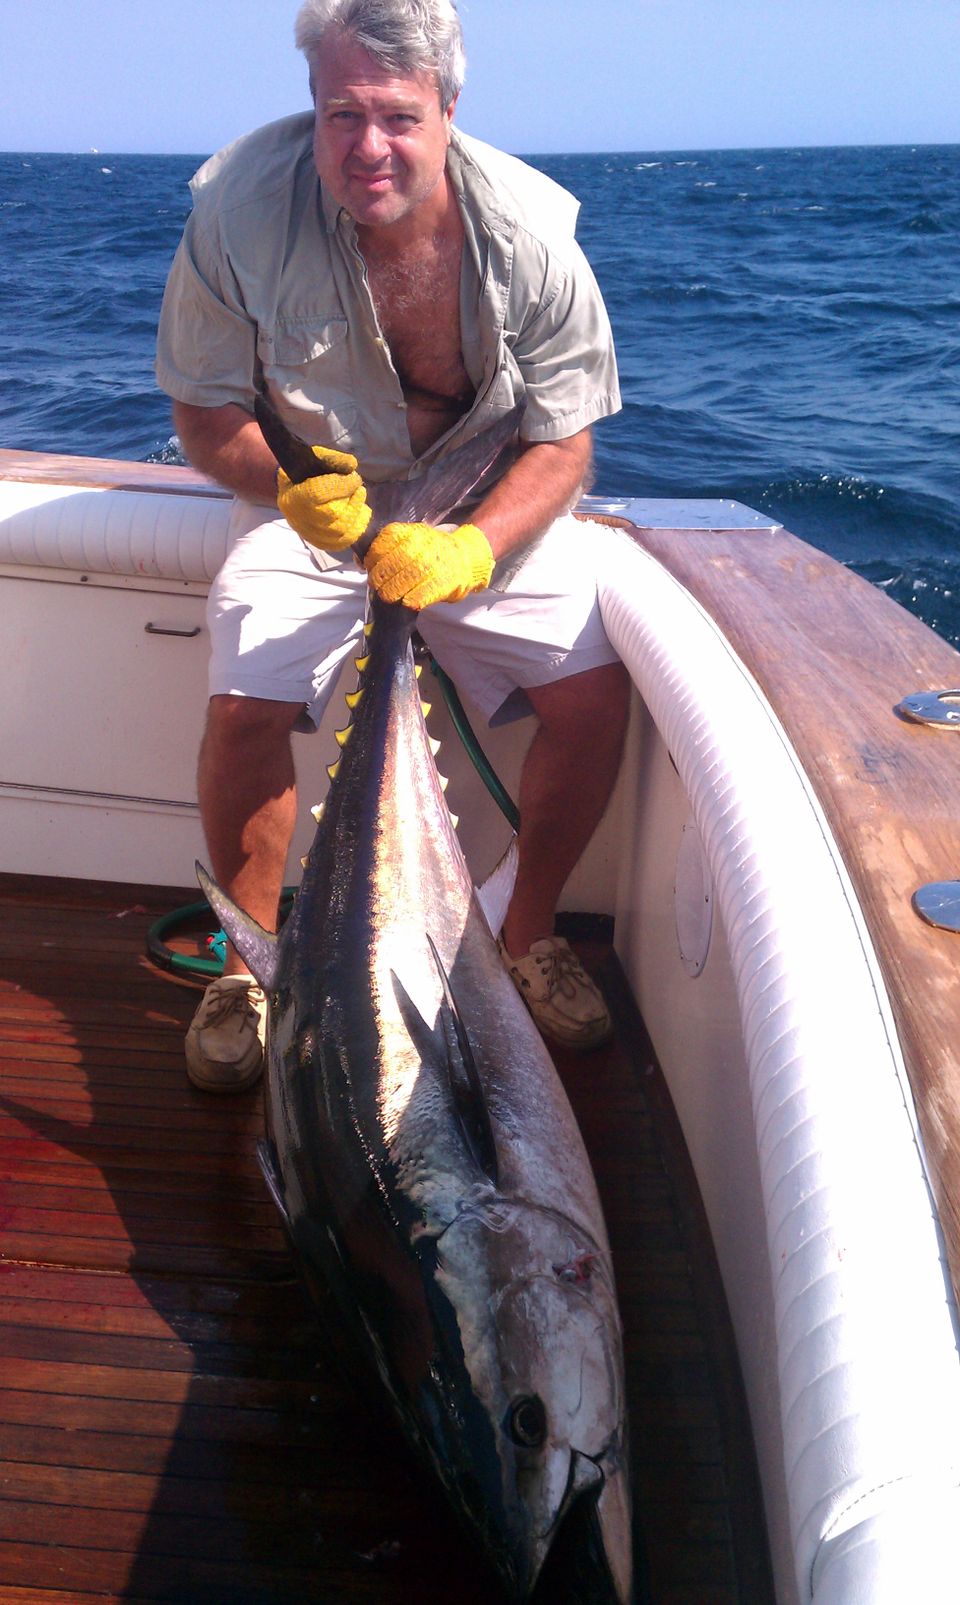 Man on boat holding tuna2